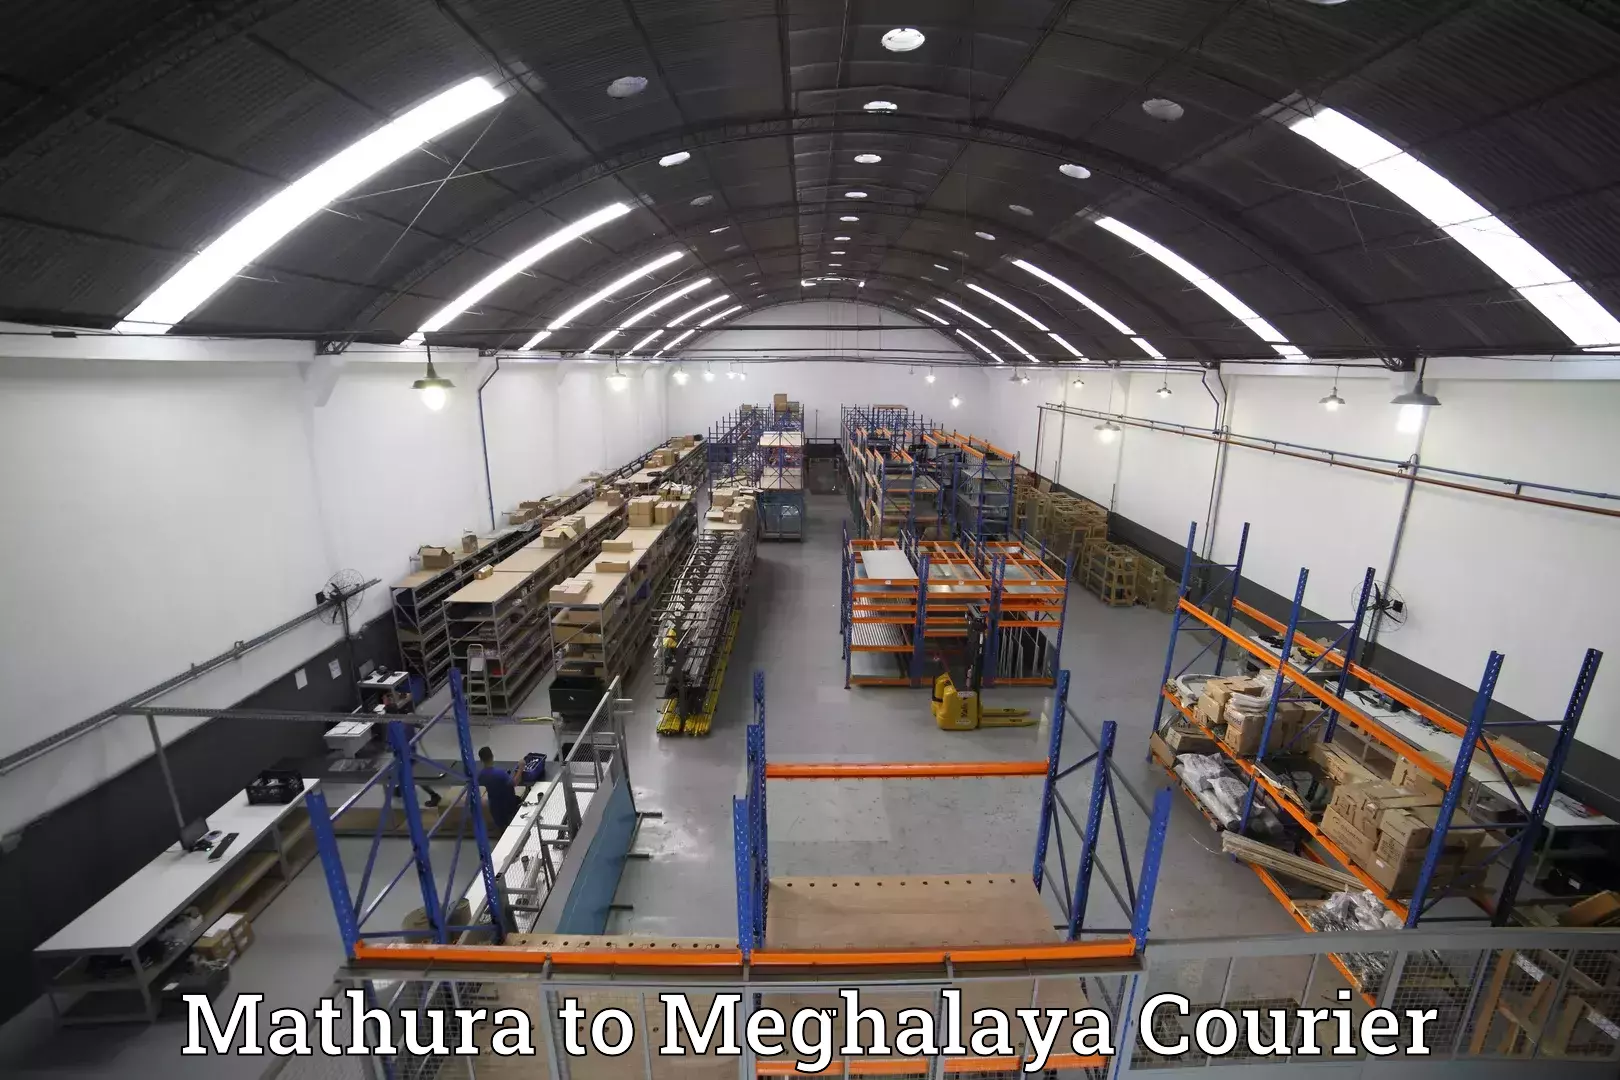 Luggage transport consultancy Mathura to Meghalaya